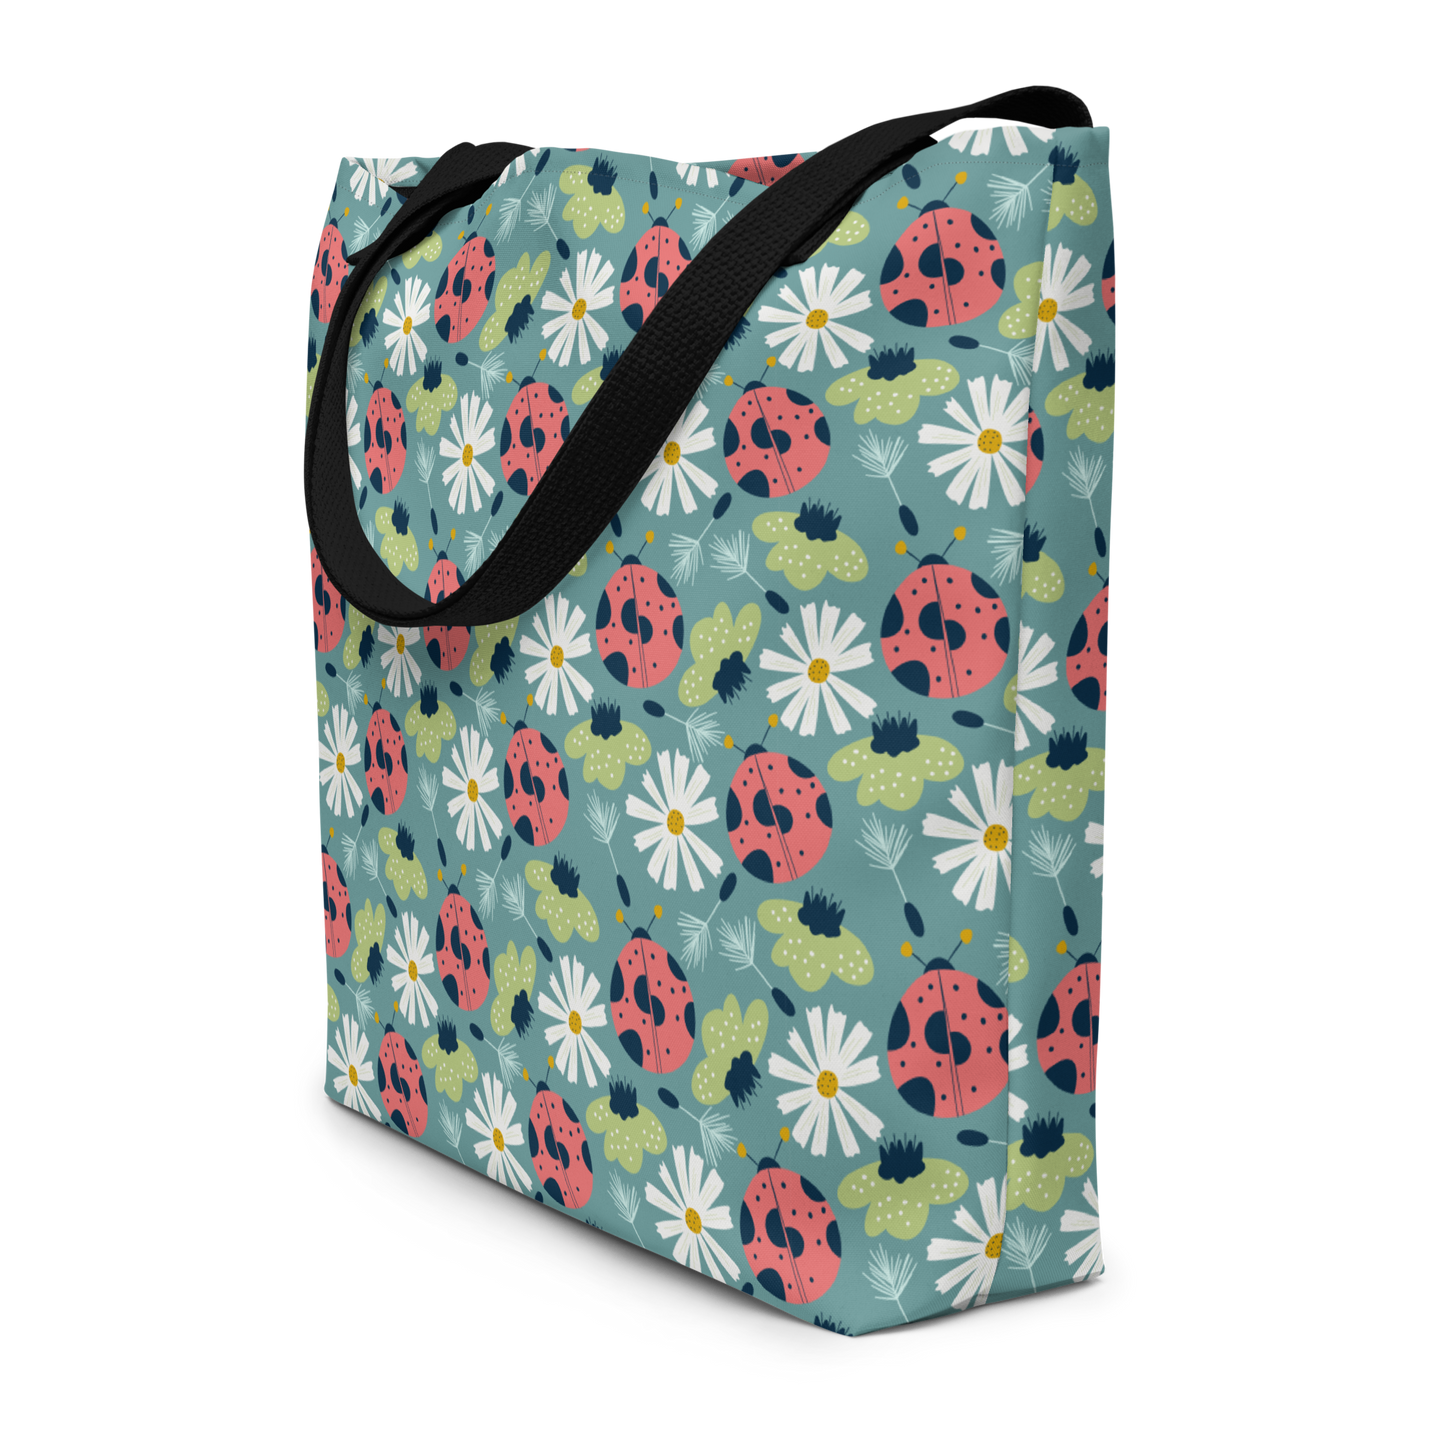 Scandinavian Spring Floral | Seamless Patterns | All-Over Print Large Tote Bag w/ Pocket - #2